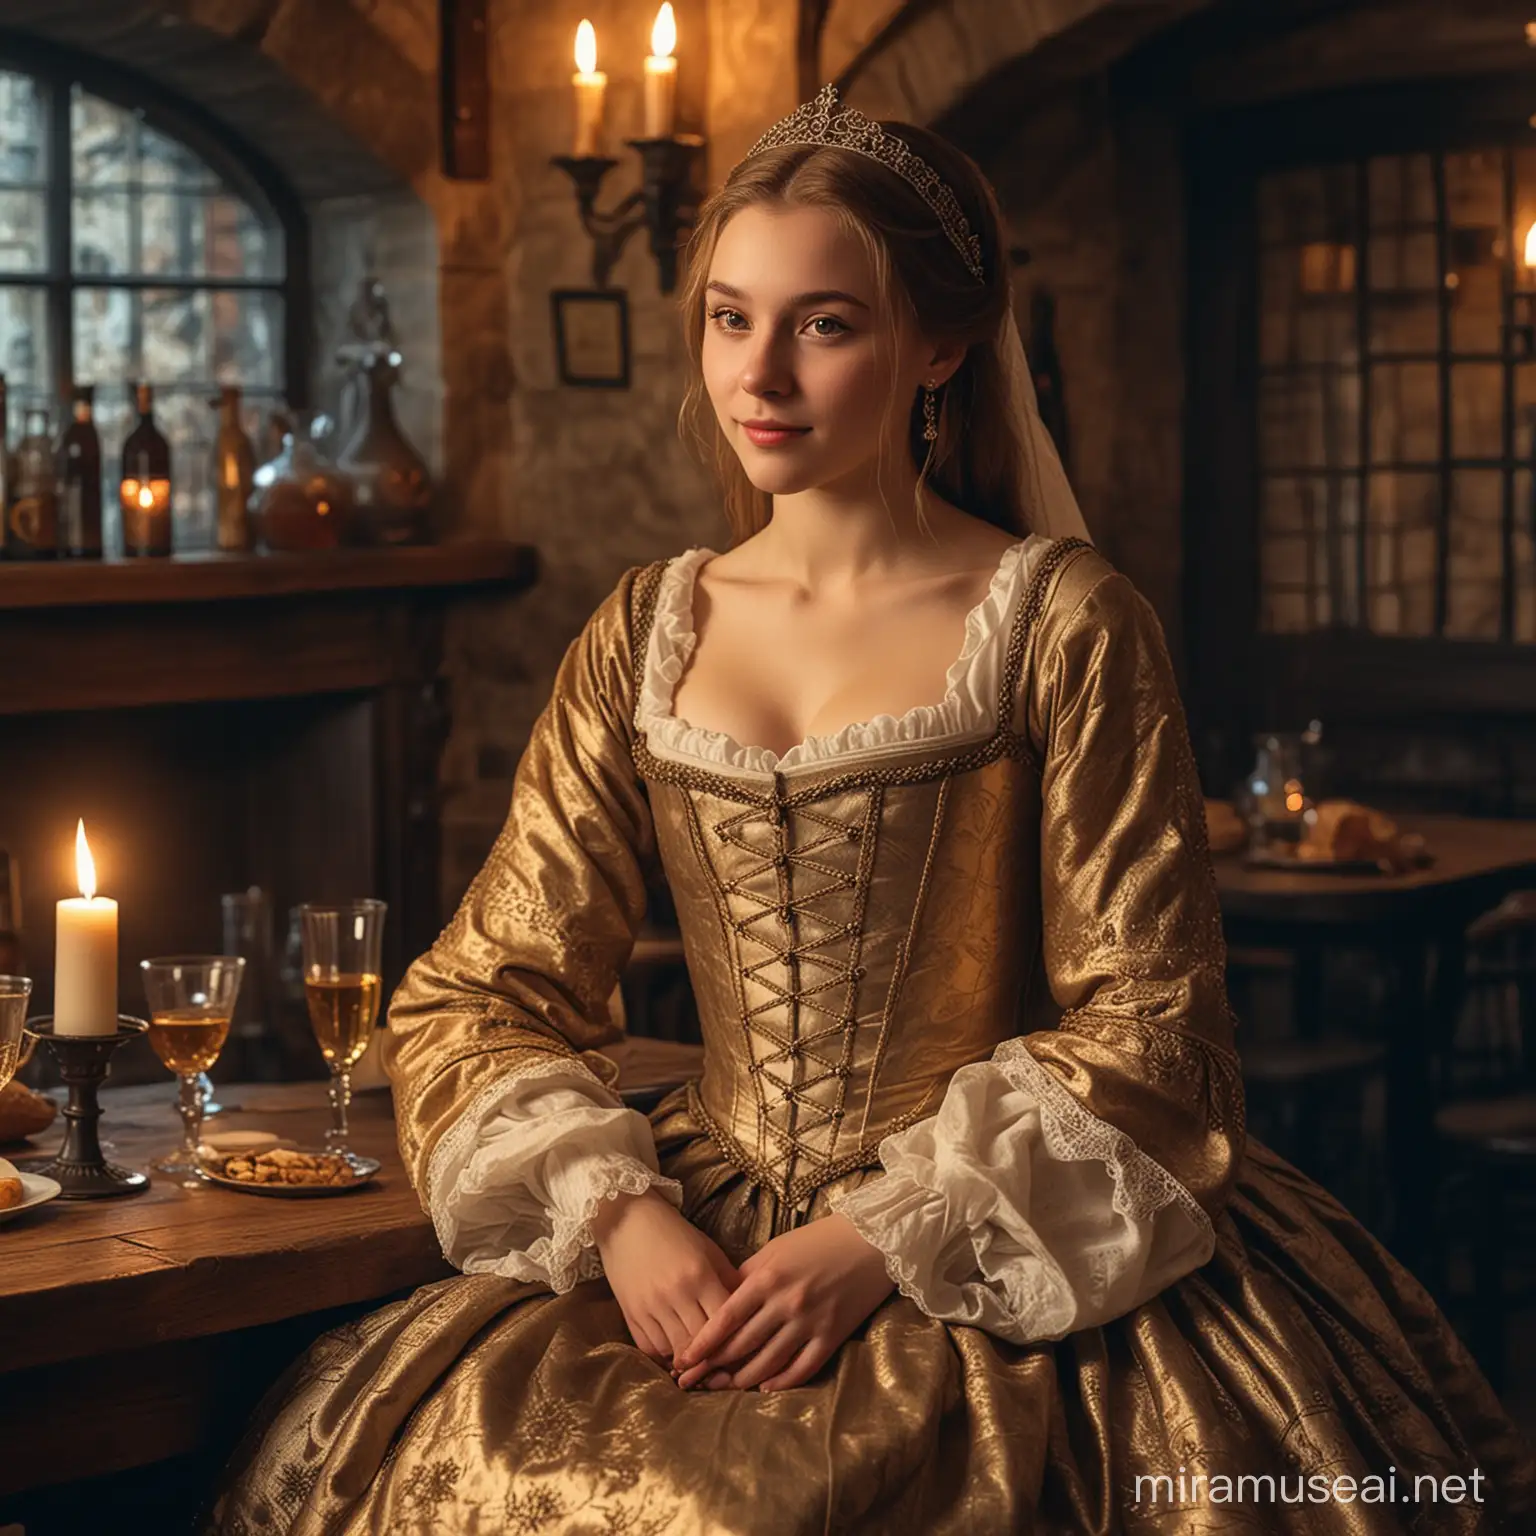 Enchanting 16YearOld Female Courtesan in Medieval Tavern Setting